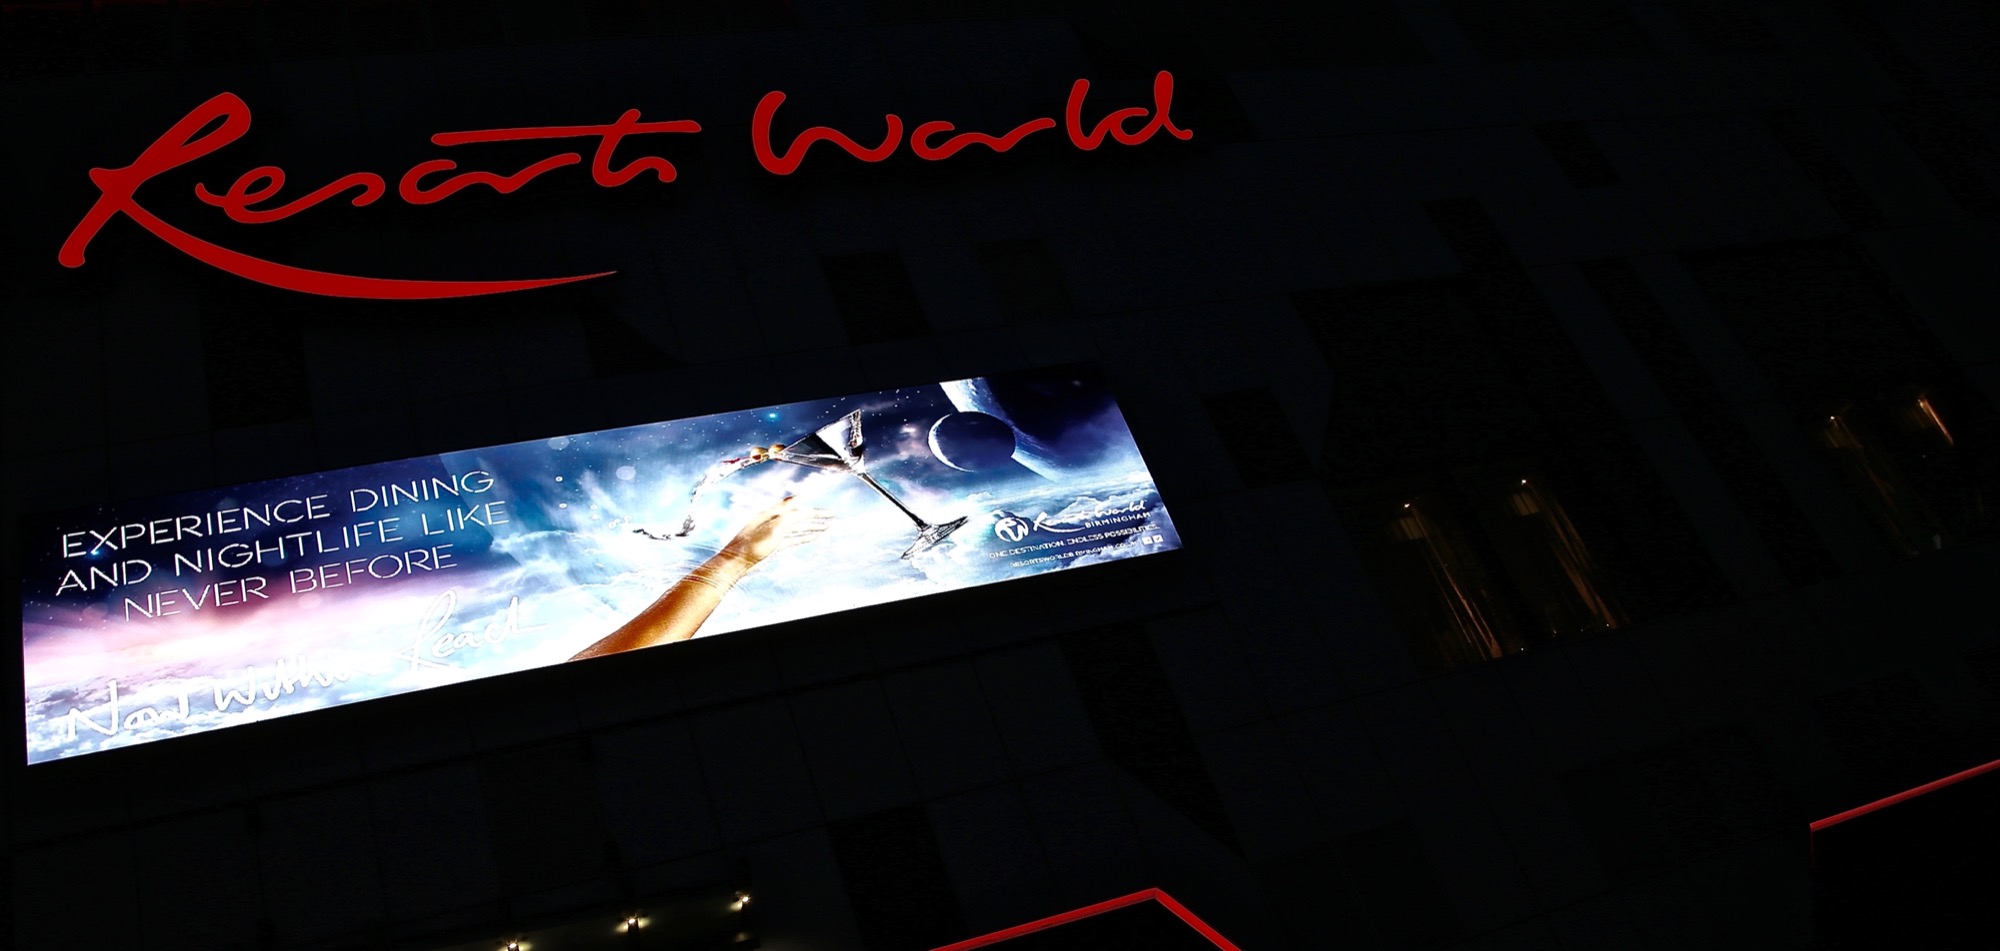 Resorts World hotel digital signage at night